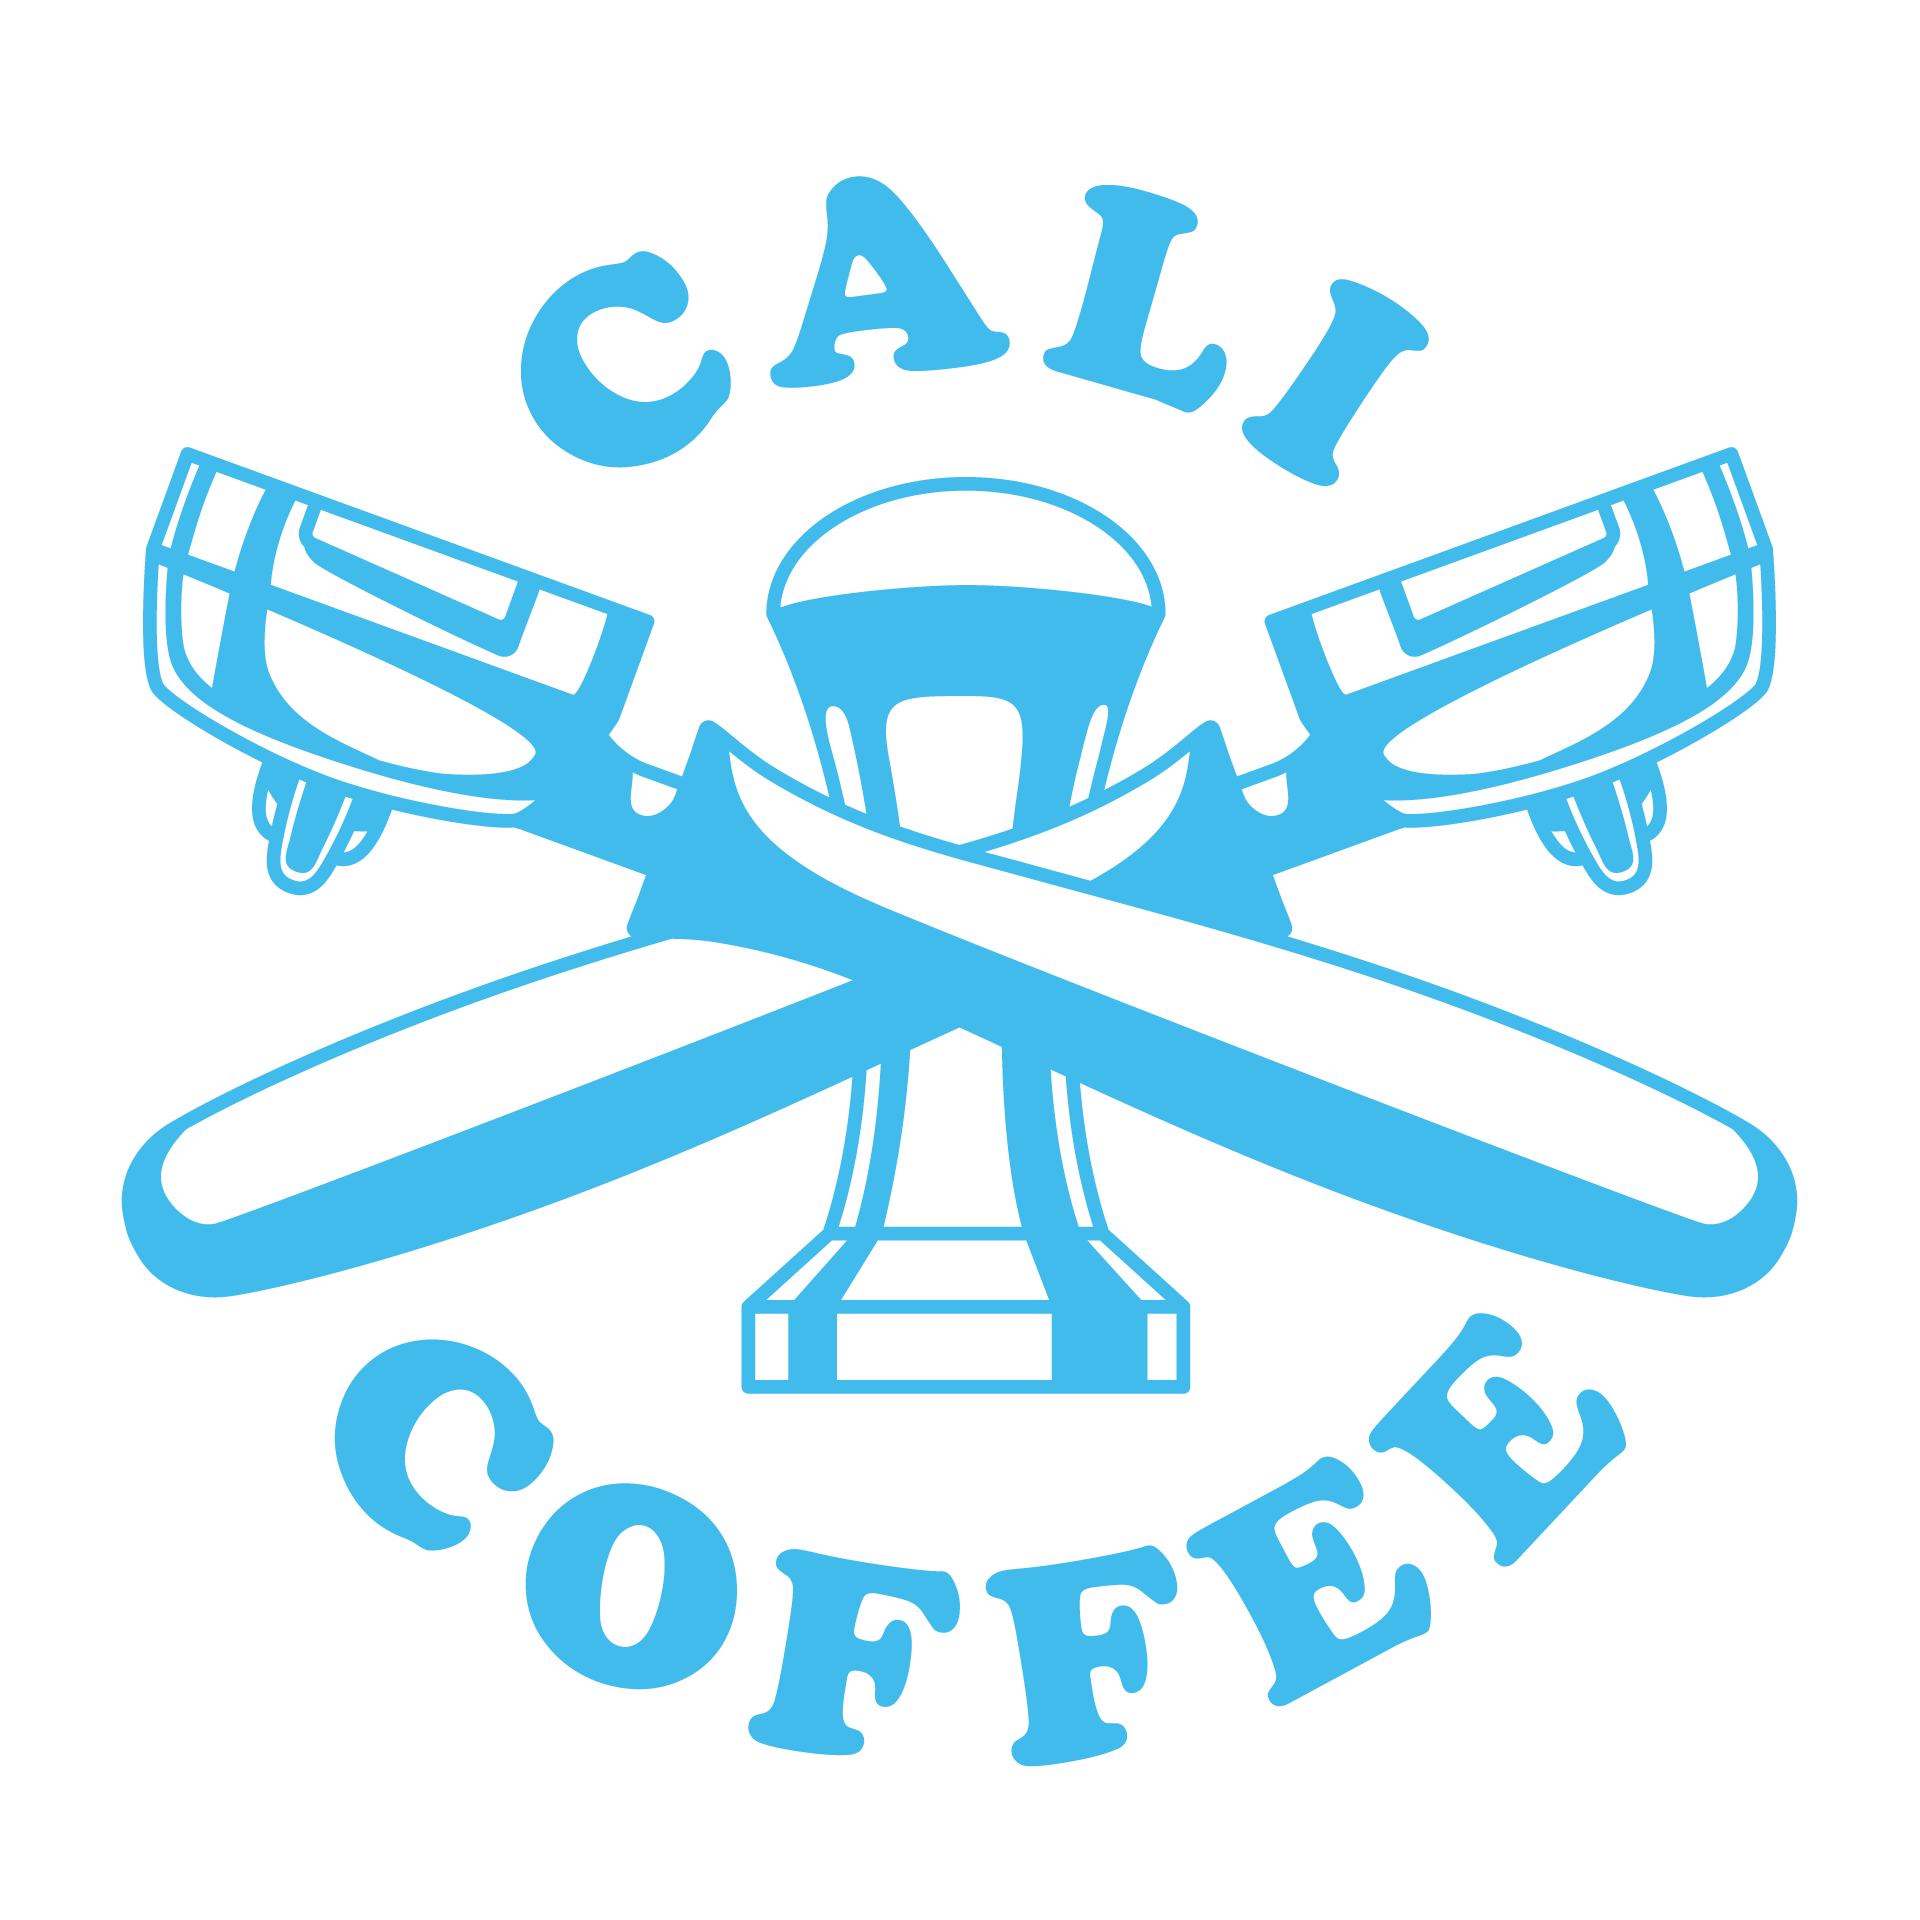 Cali Coffee Illustration - Portafilter X